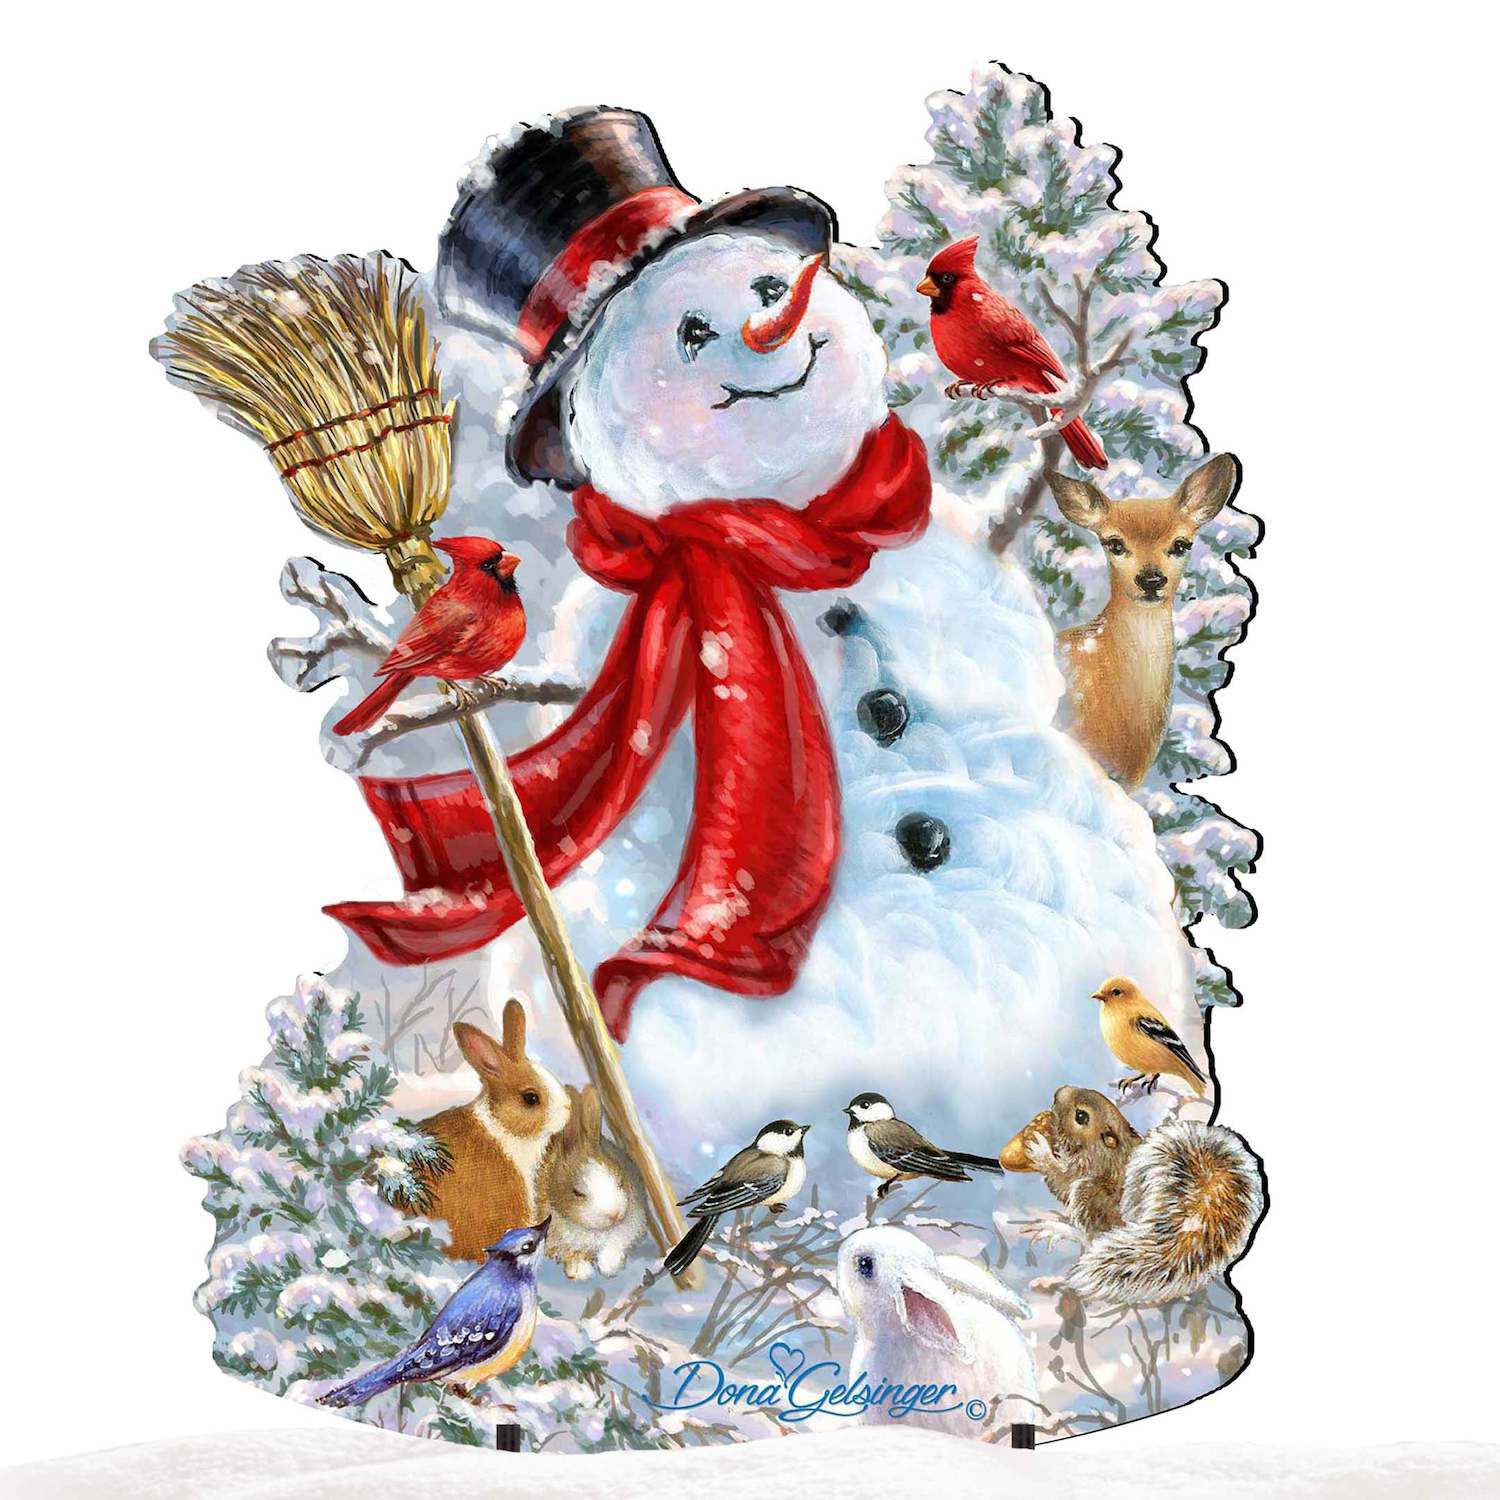 Snowman Family Outdoor Decor by G. Debrekht - Christmas Santa Snowman Decor  - 8611057F